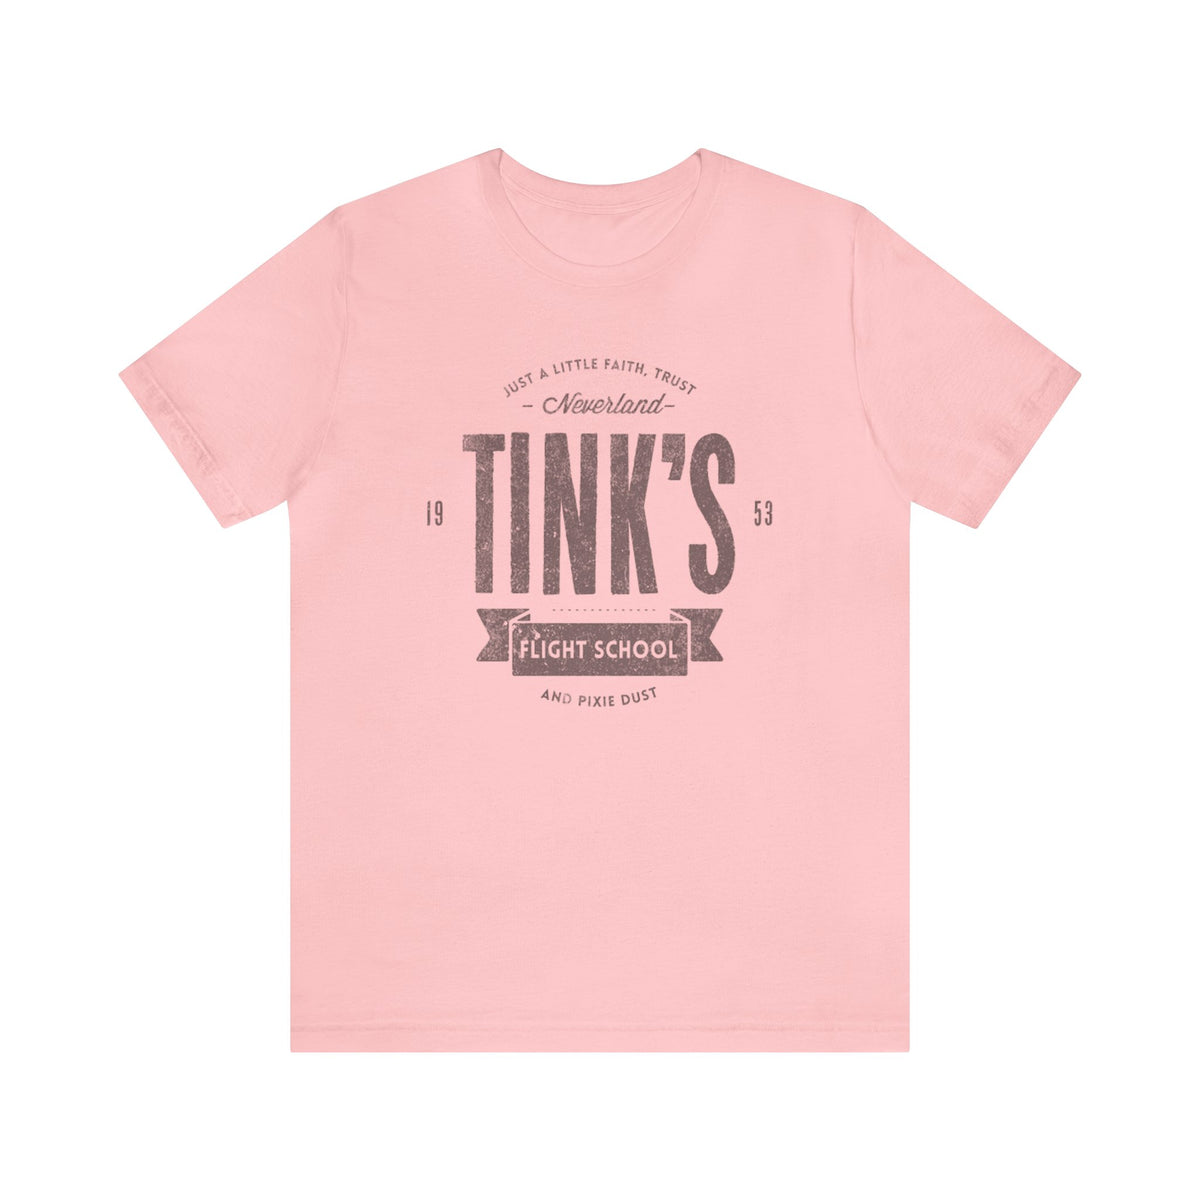 Not synced Tink’s Flight School Bella Canvas Unisex Jersey Short Sleeve Tee